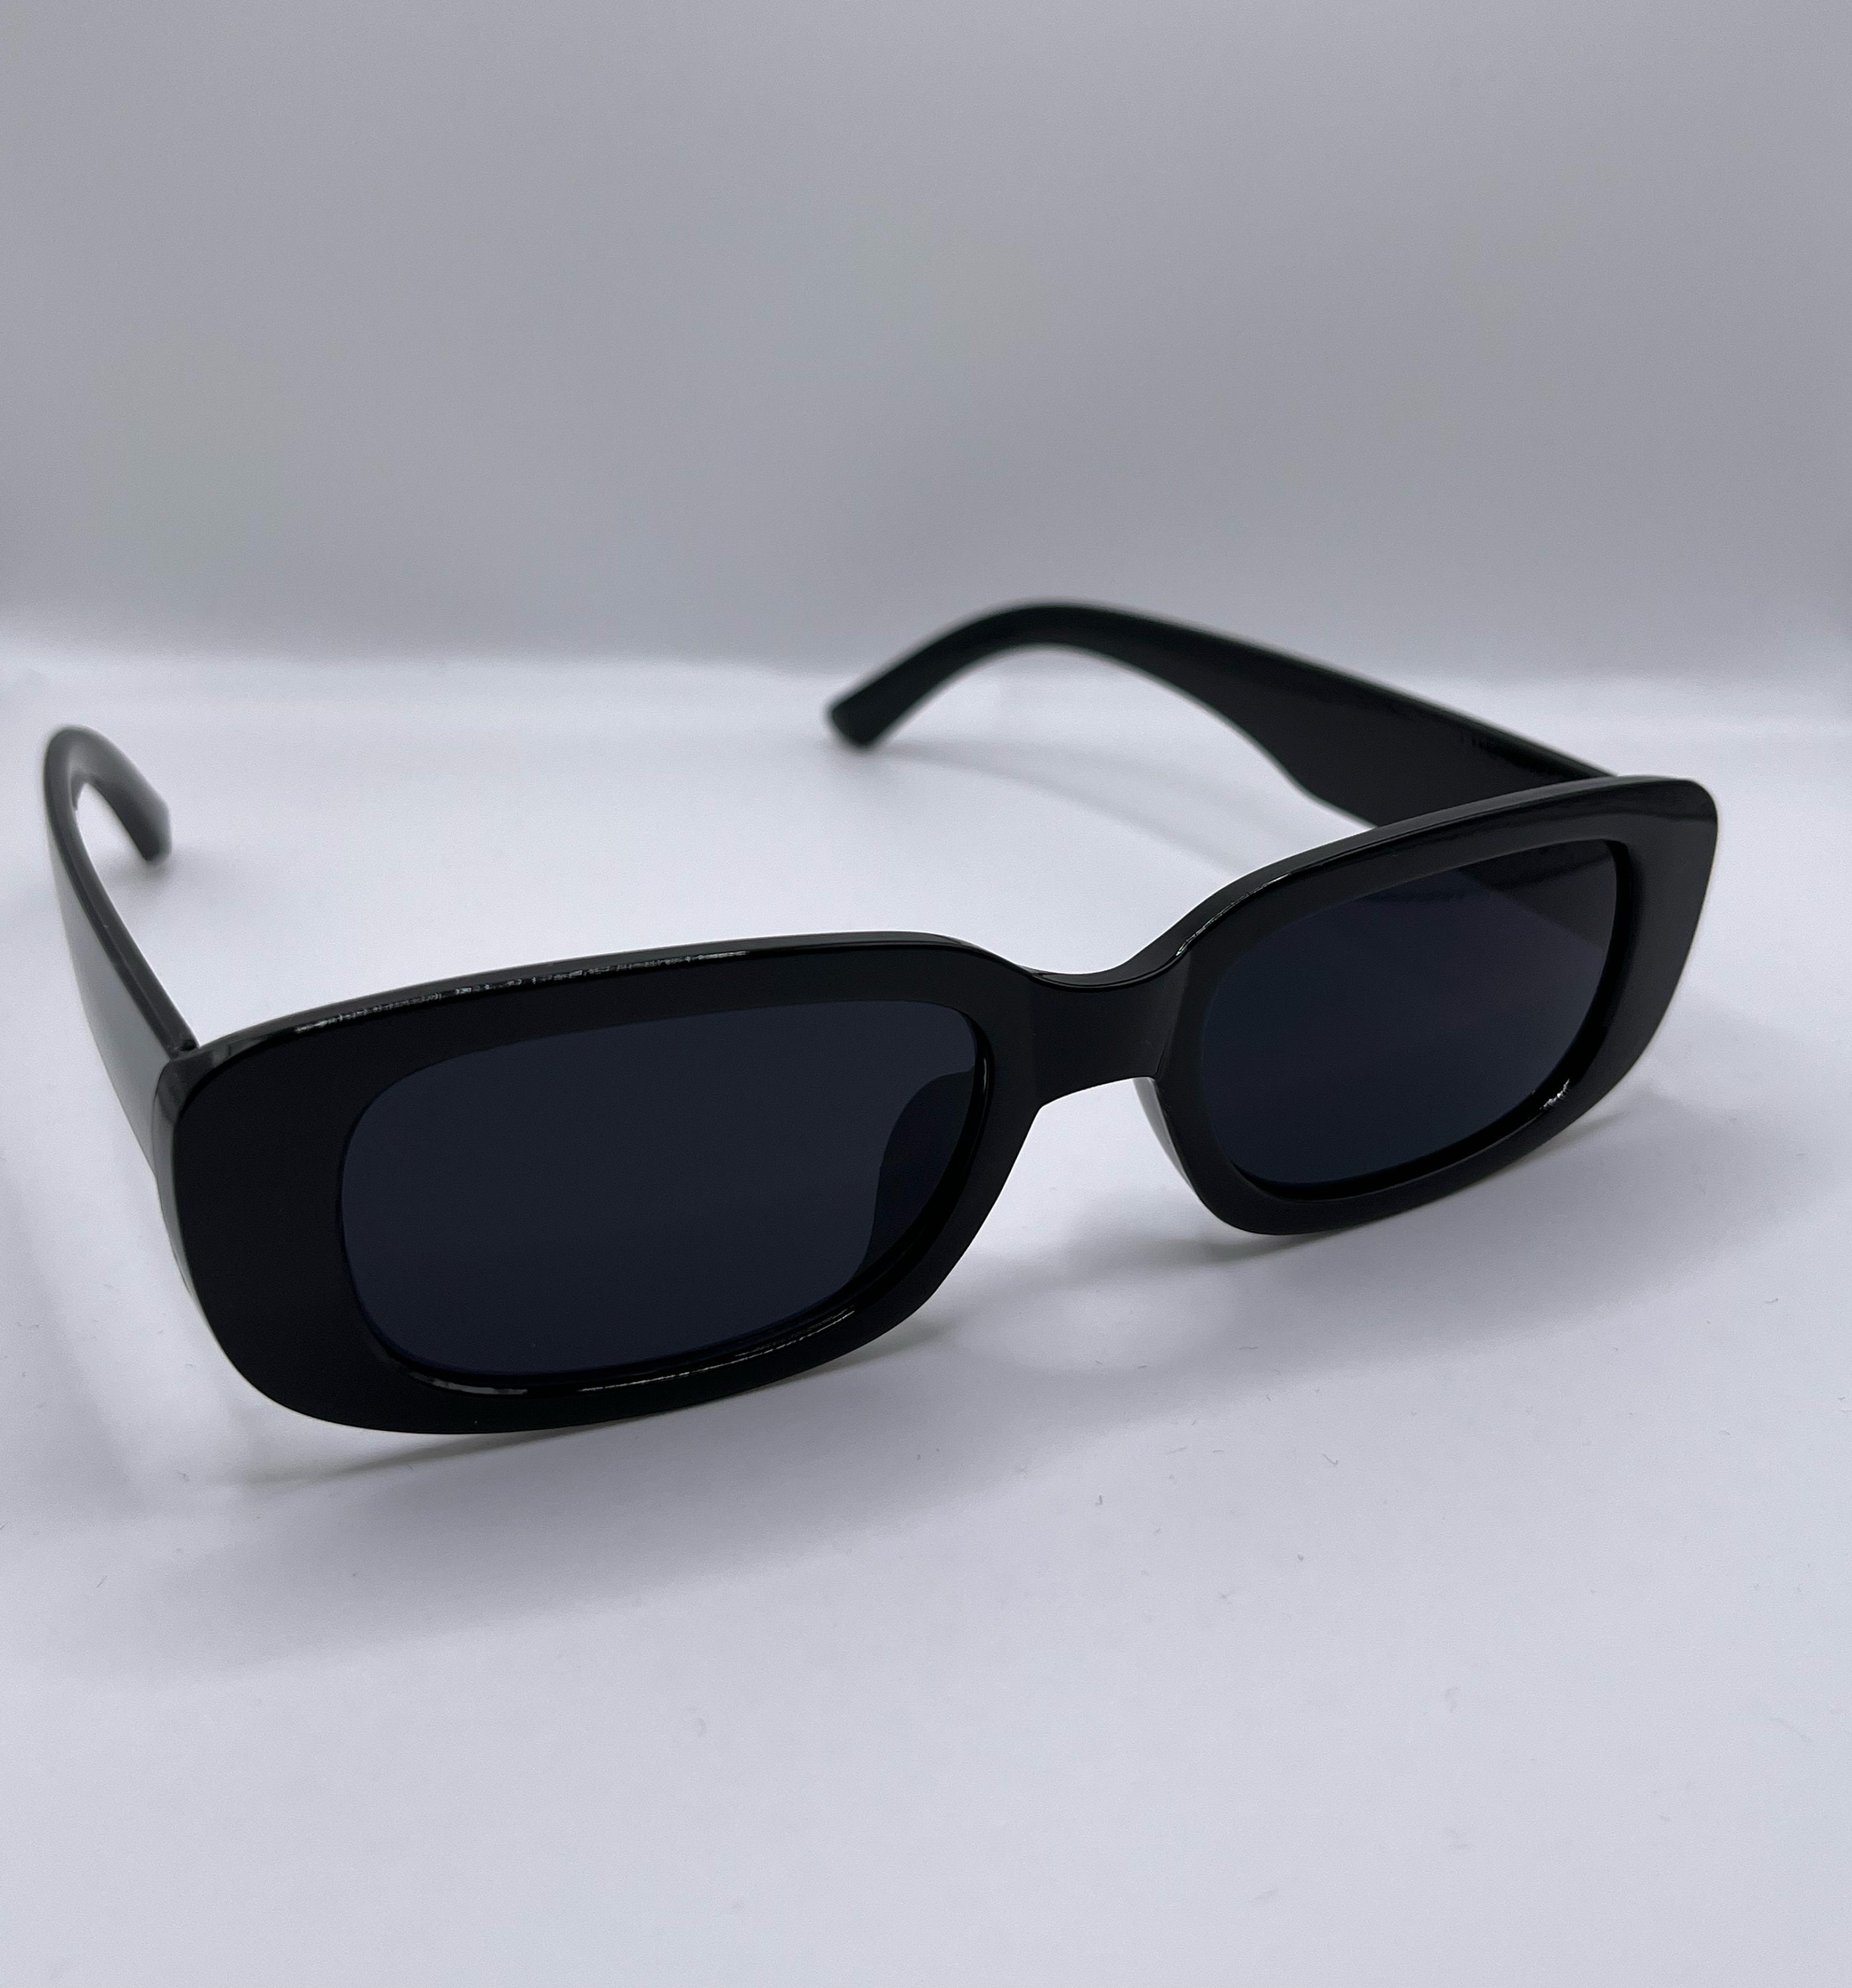 Winter/spring Black Sunglasses, Retro Mens Rectangle Sunglasses, Unisex Sunglasses Etsy - Womens Sunglasses, Sunglasses, Sunglasses,